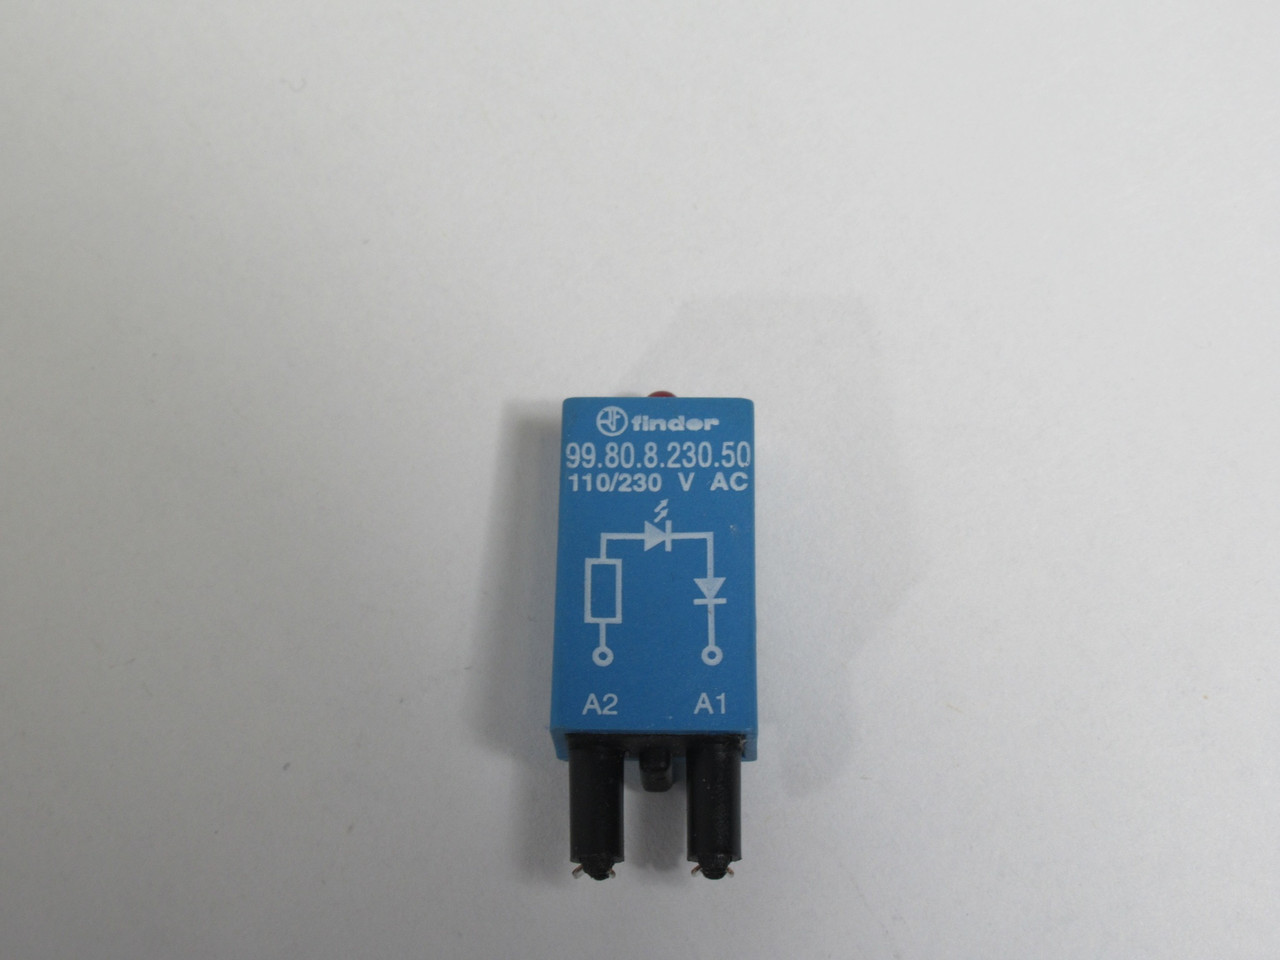 Finder 99.80.8.230.50 RED LED Surge Suppressor Module 110/230VAC USED